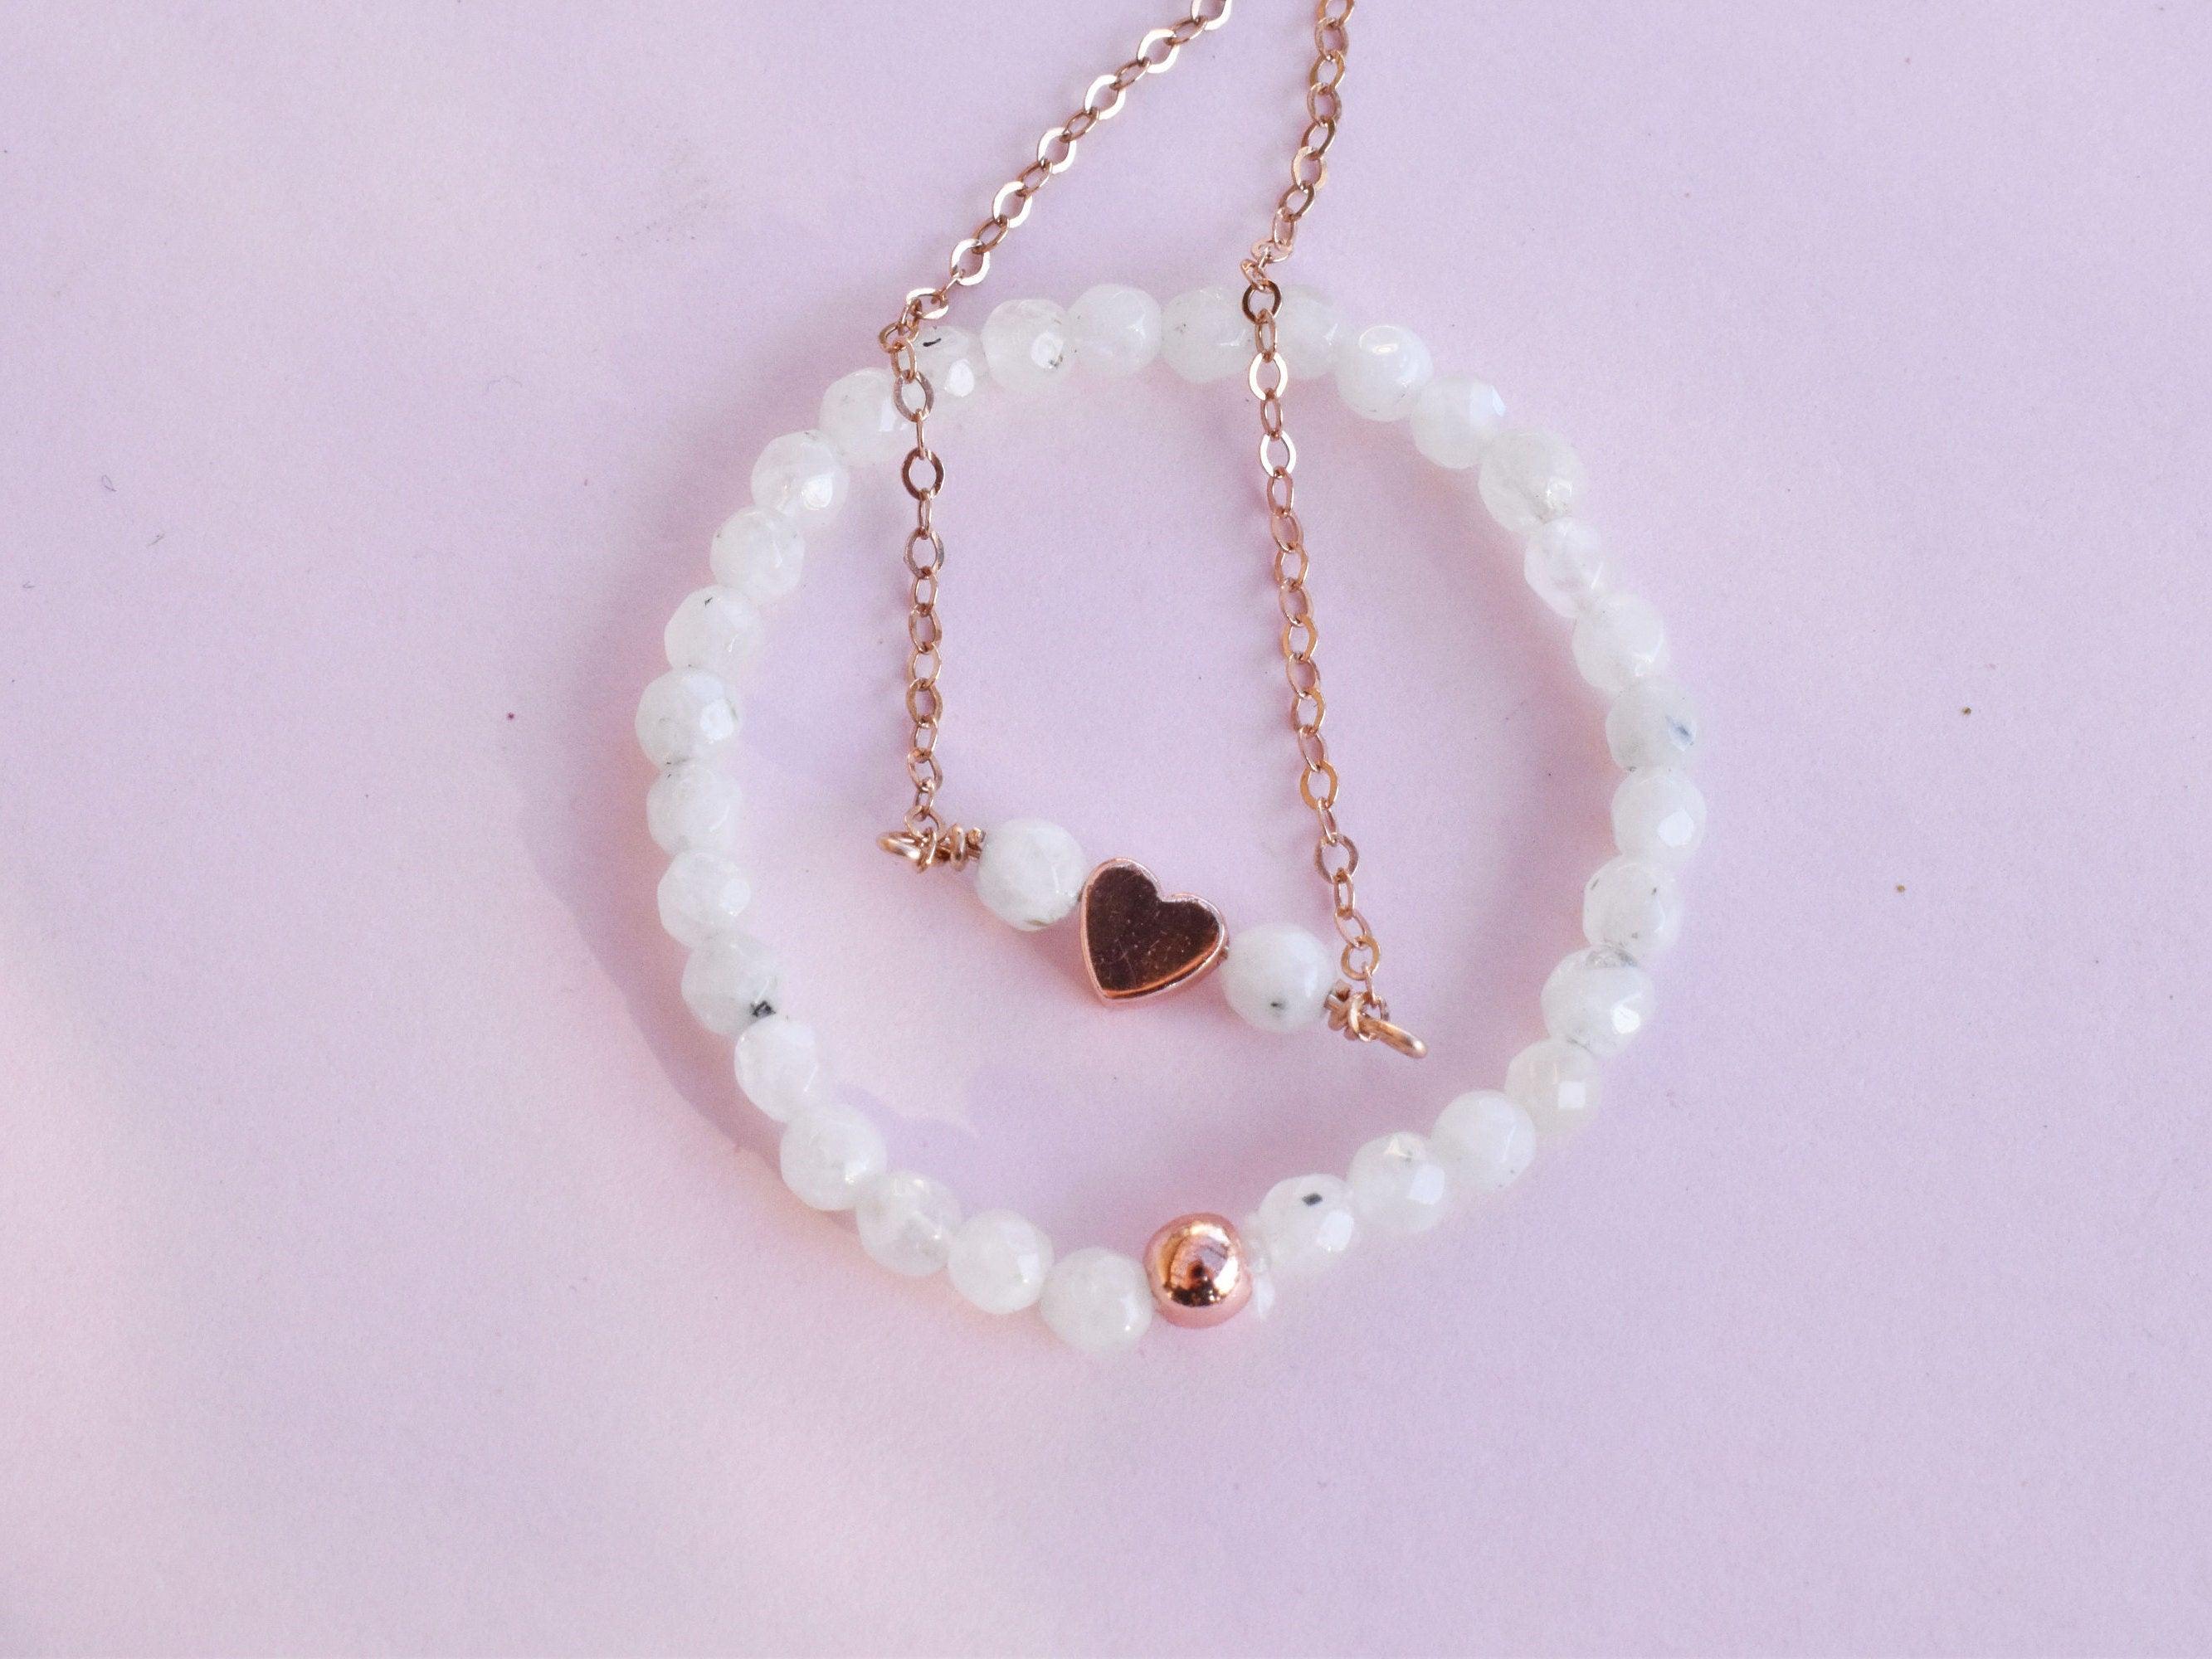 Girls rose gold healing gemstone necklace and bracelet set featuring moonstones. 